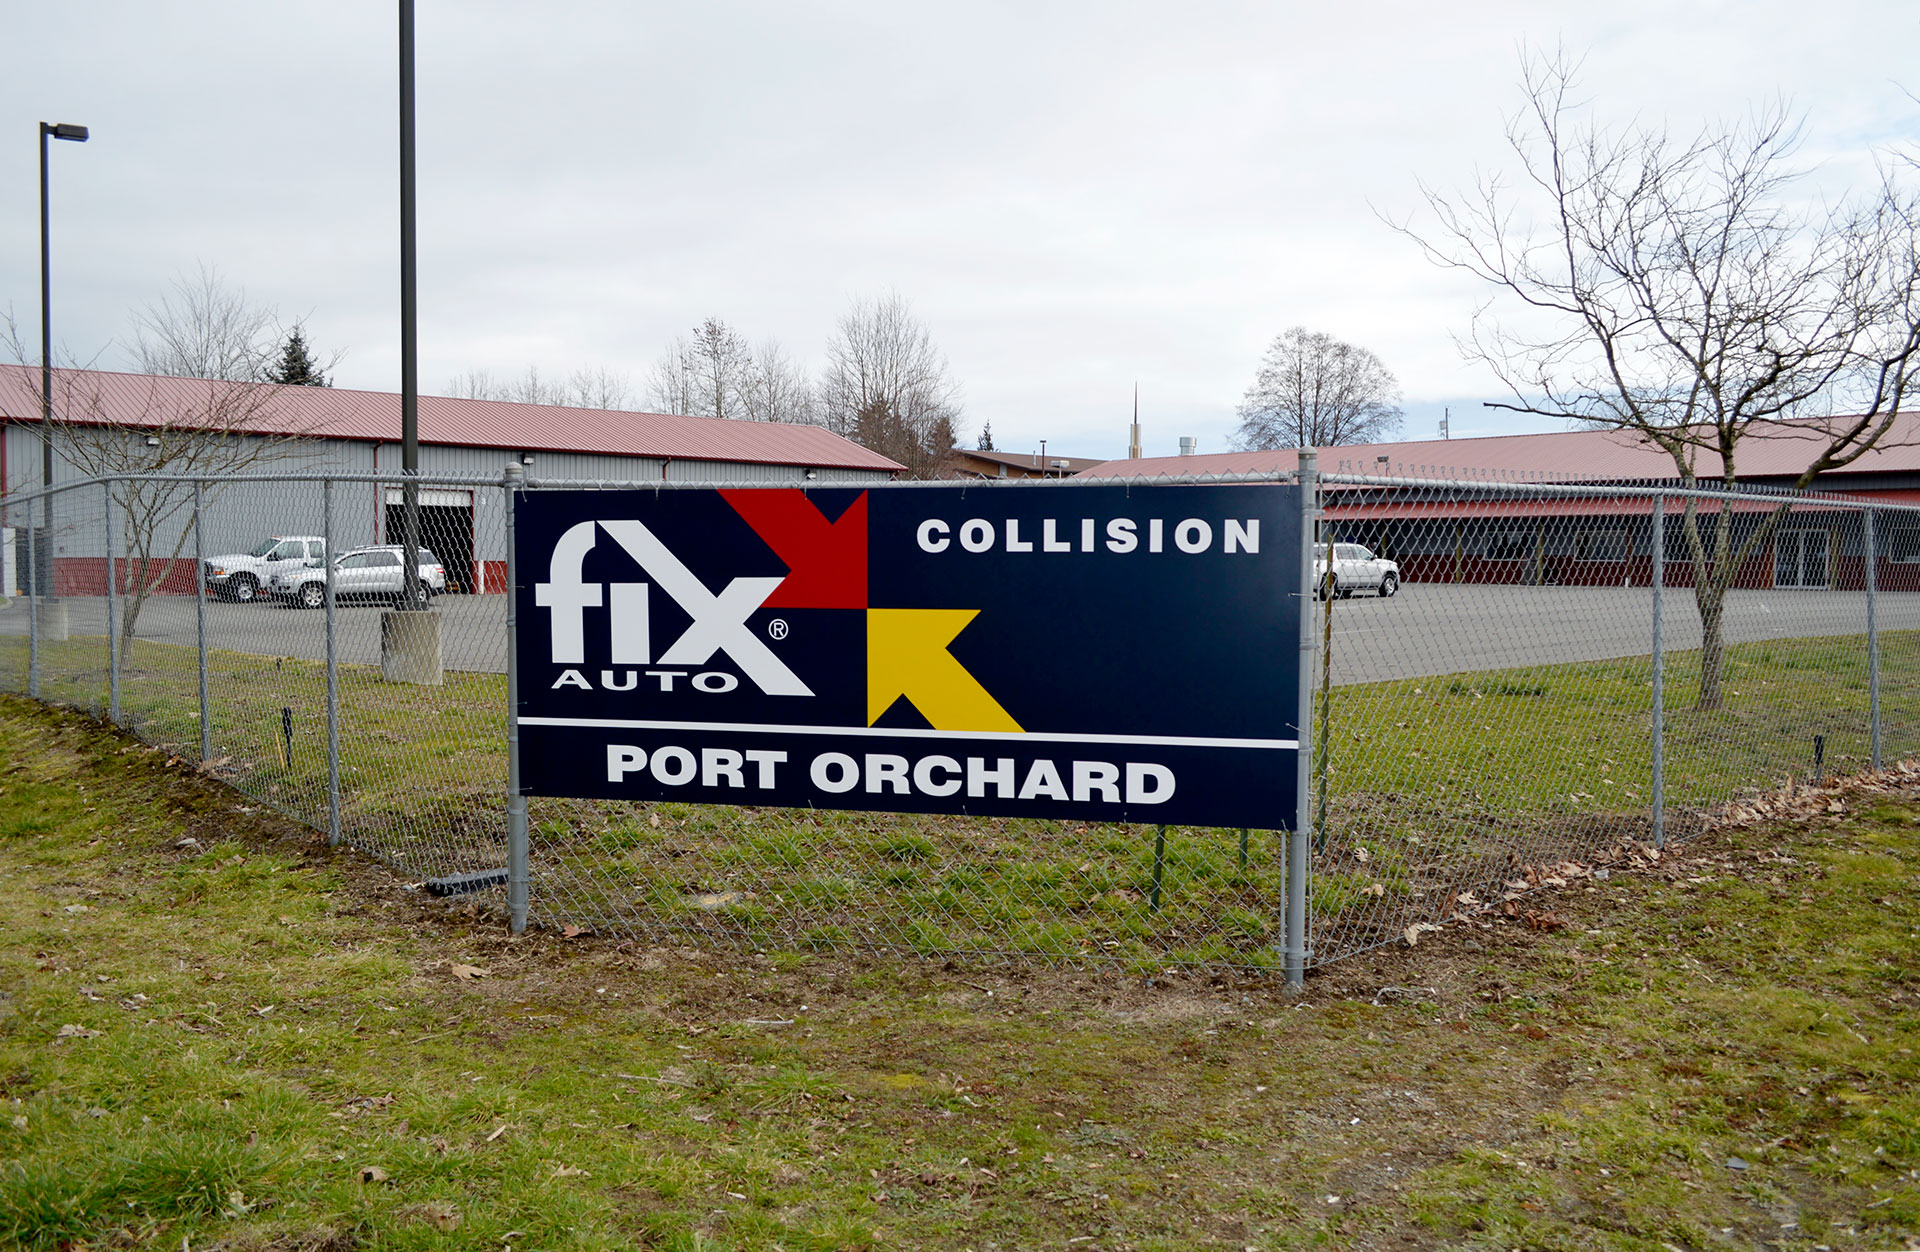 Fix Auto Port Orchard Auto Body Shop Sign and Building Exterior